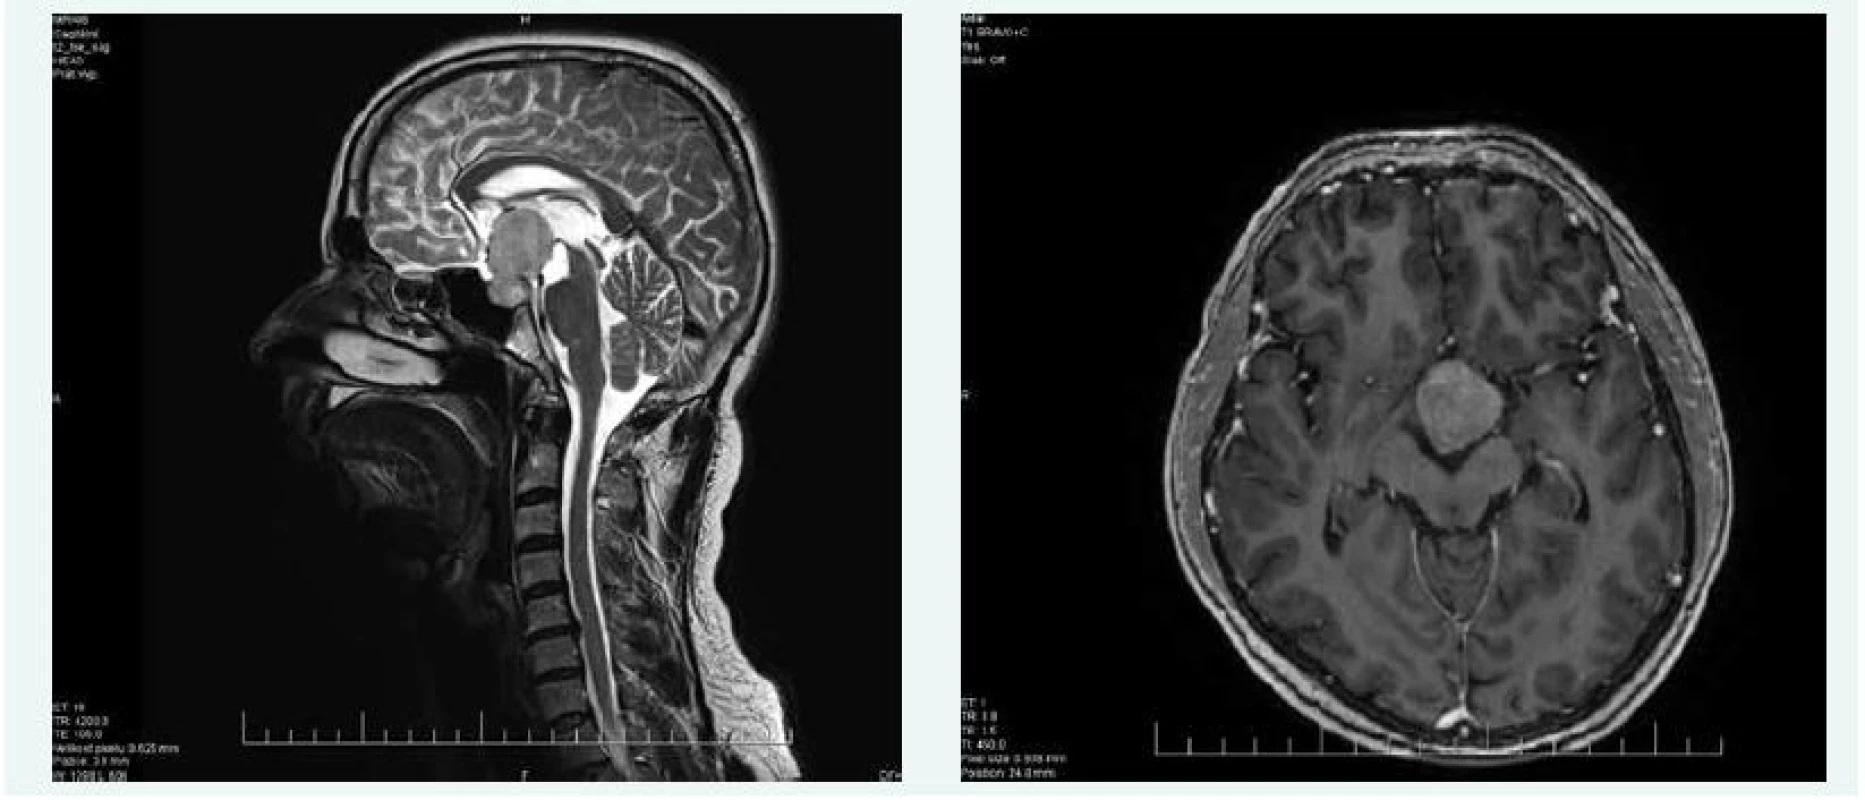 Kazuistika 2 – makroadenom hypofýzy (MRI) (snímky v plném rozlišení naleznete v on-line verzi článku)